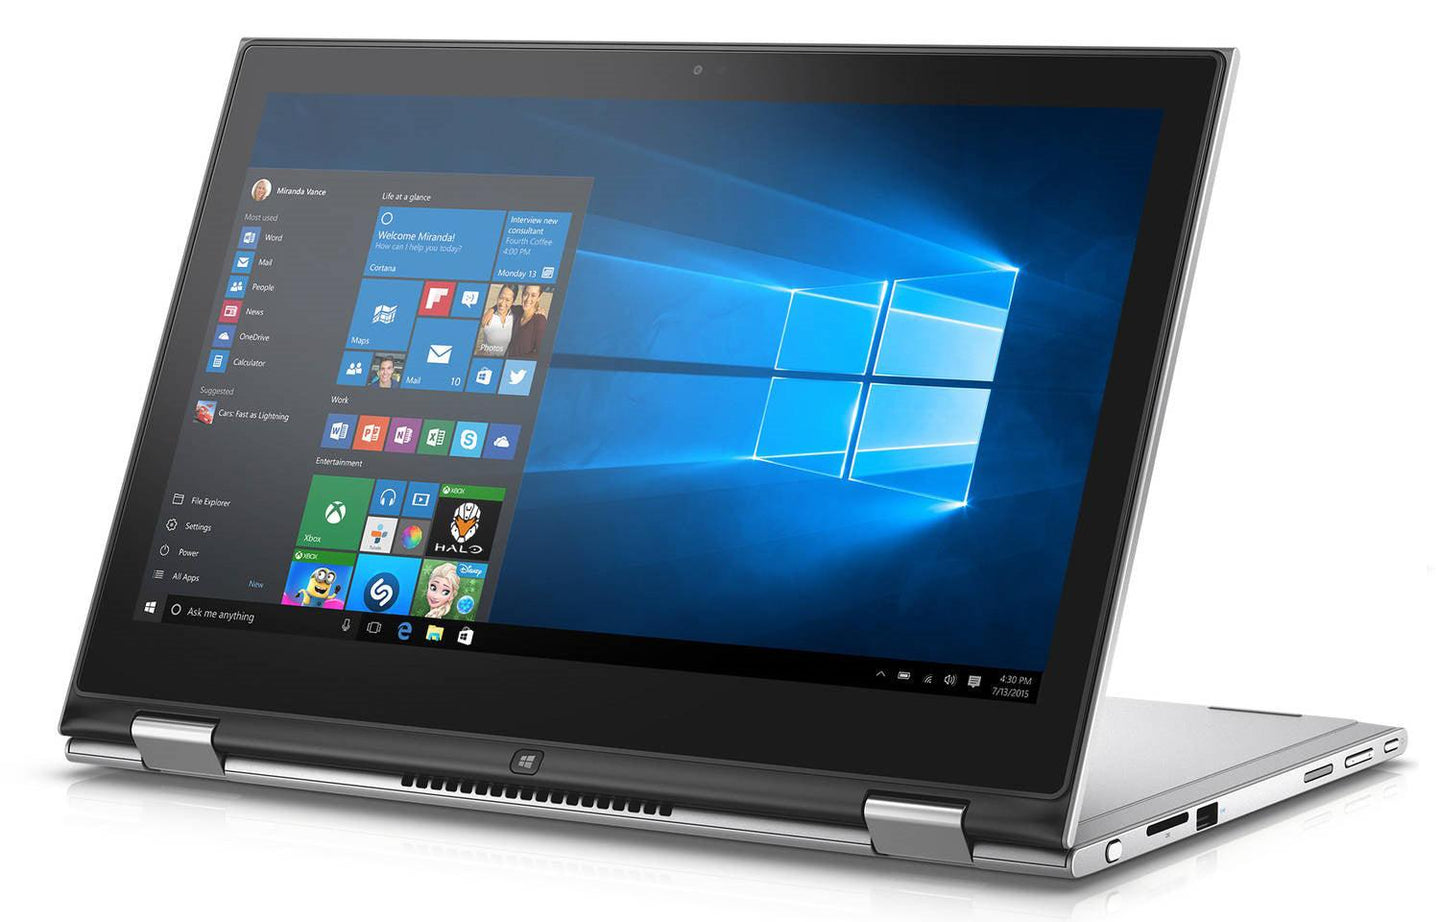 Dell Inspiron 13-7359 Laptop Intel Core i3-6100U 4GB DDR3 120GB SSD WIN 10 PRO